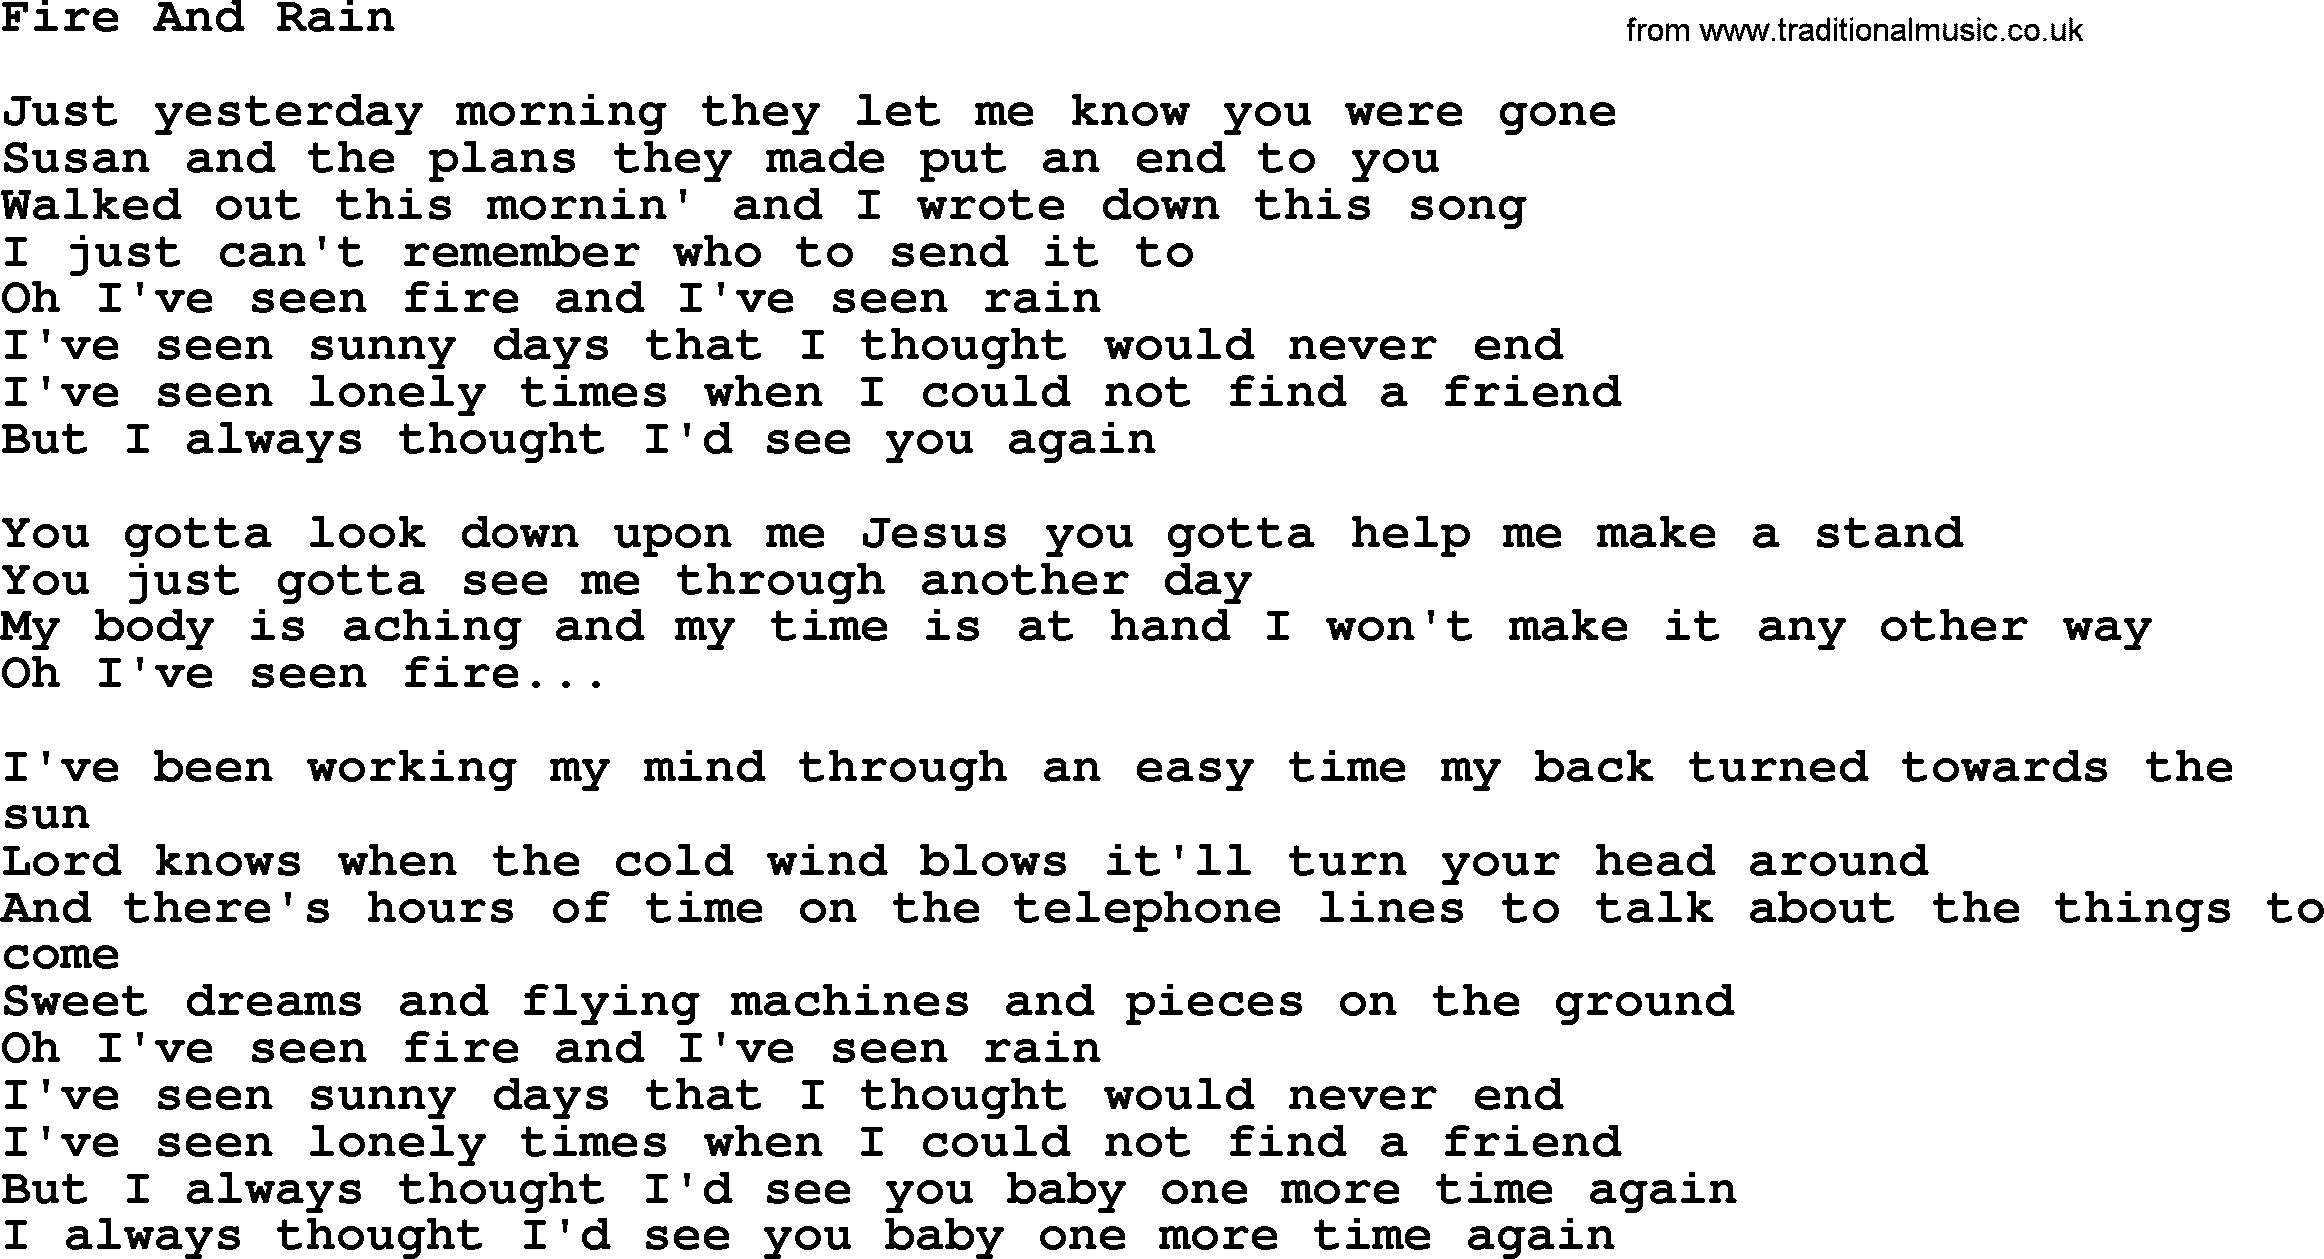 Willie Nelson song: Fire And Rain lyrics